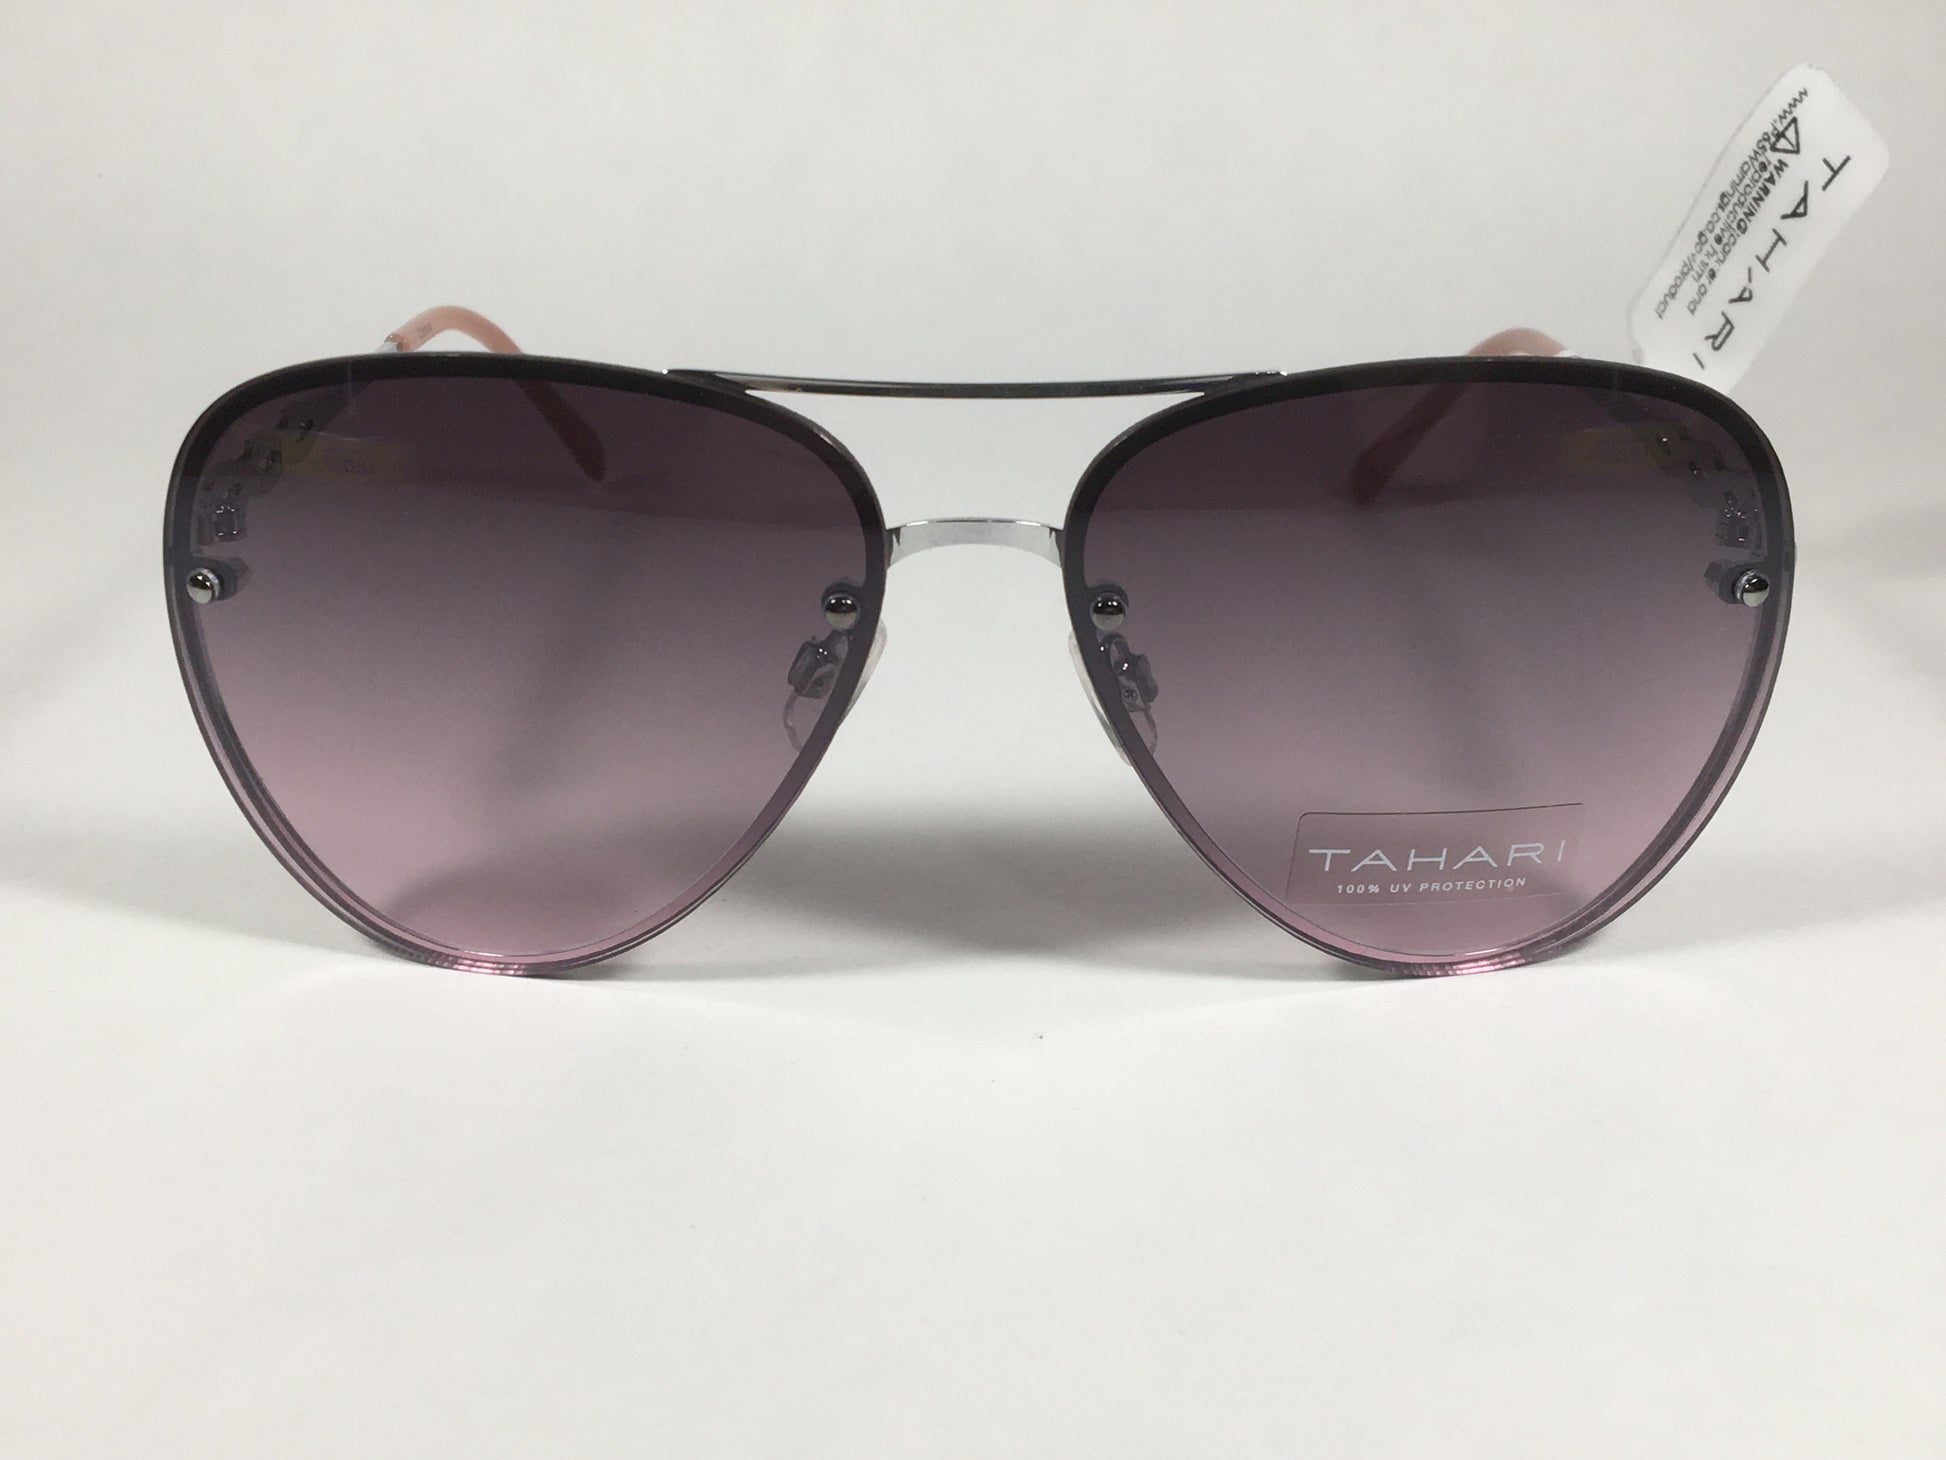 Tahari Rimless Aviator Sunglasses Silver Metal Rose Gradient Lens TH789 SLVRS - Sunglasses